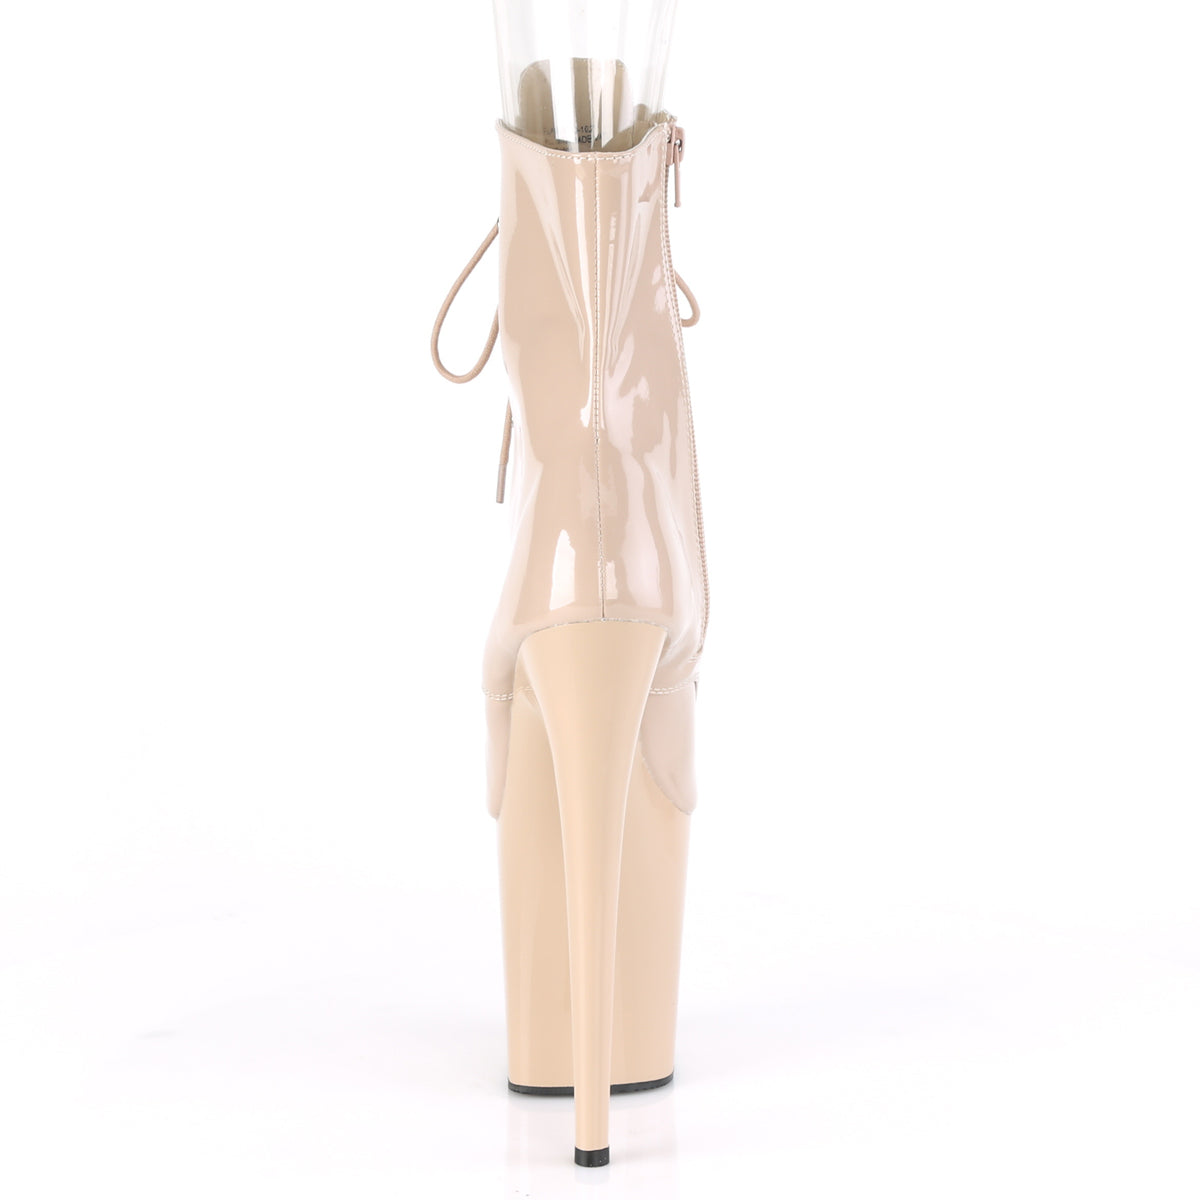 FLAMINGO-1021 8 Inch Heel Nude Patent Pole Dancing Platforms-Pleaser- Sexy Shoes Fetish Footwear